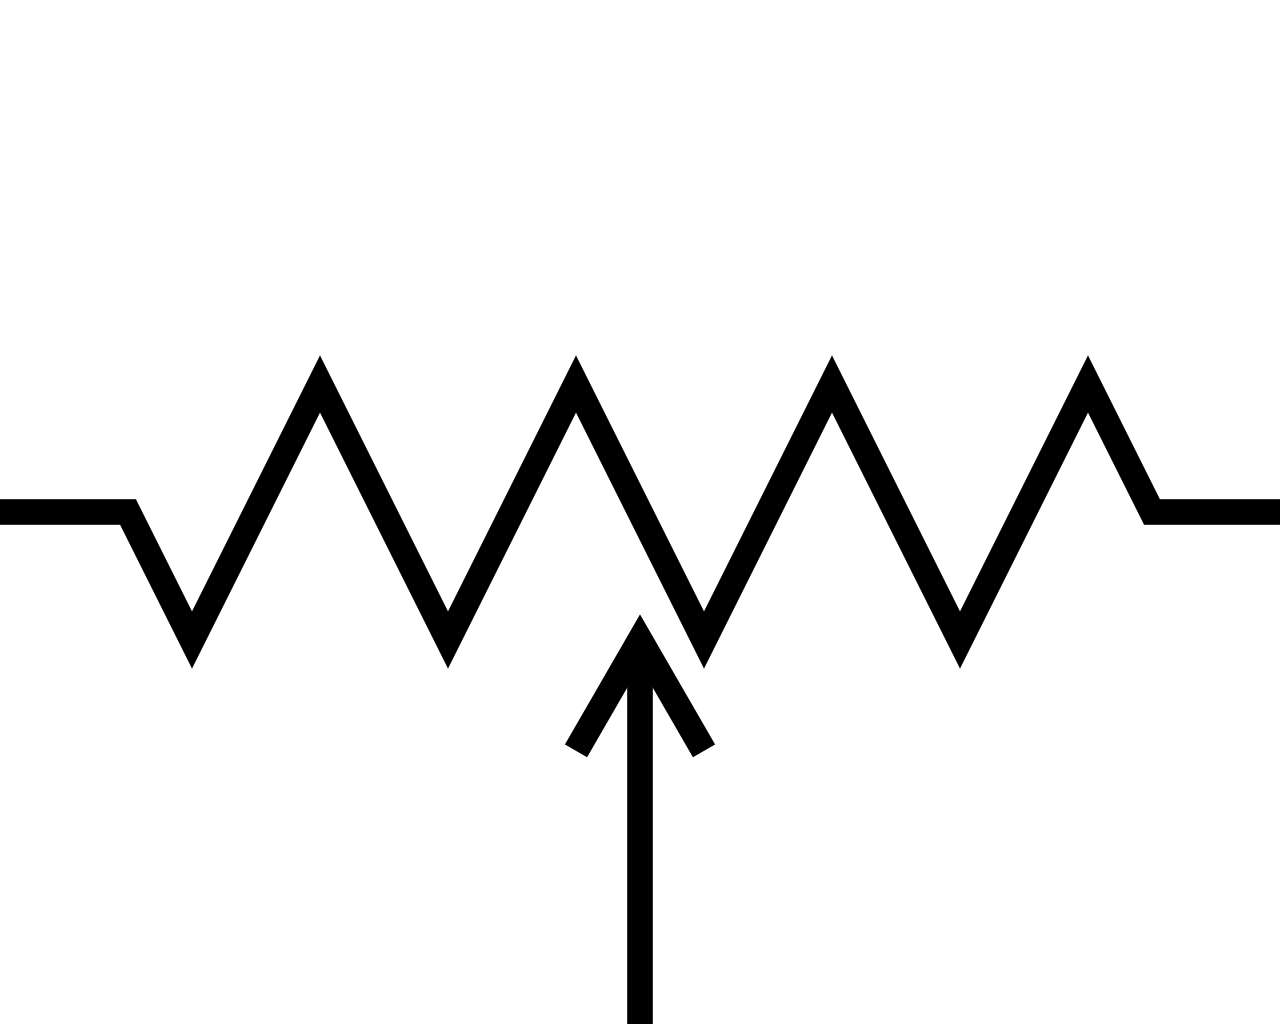 Potentiometer Symbol